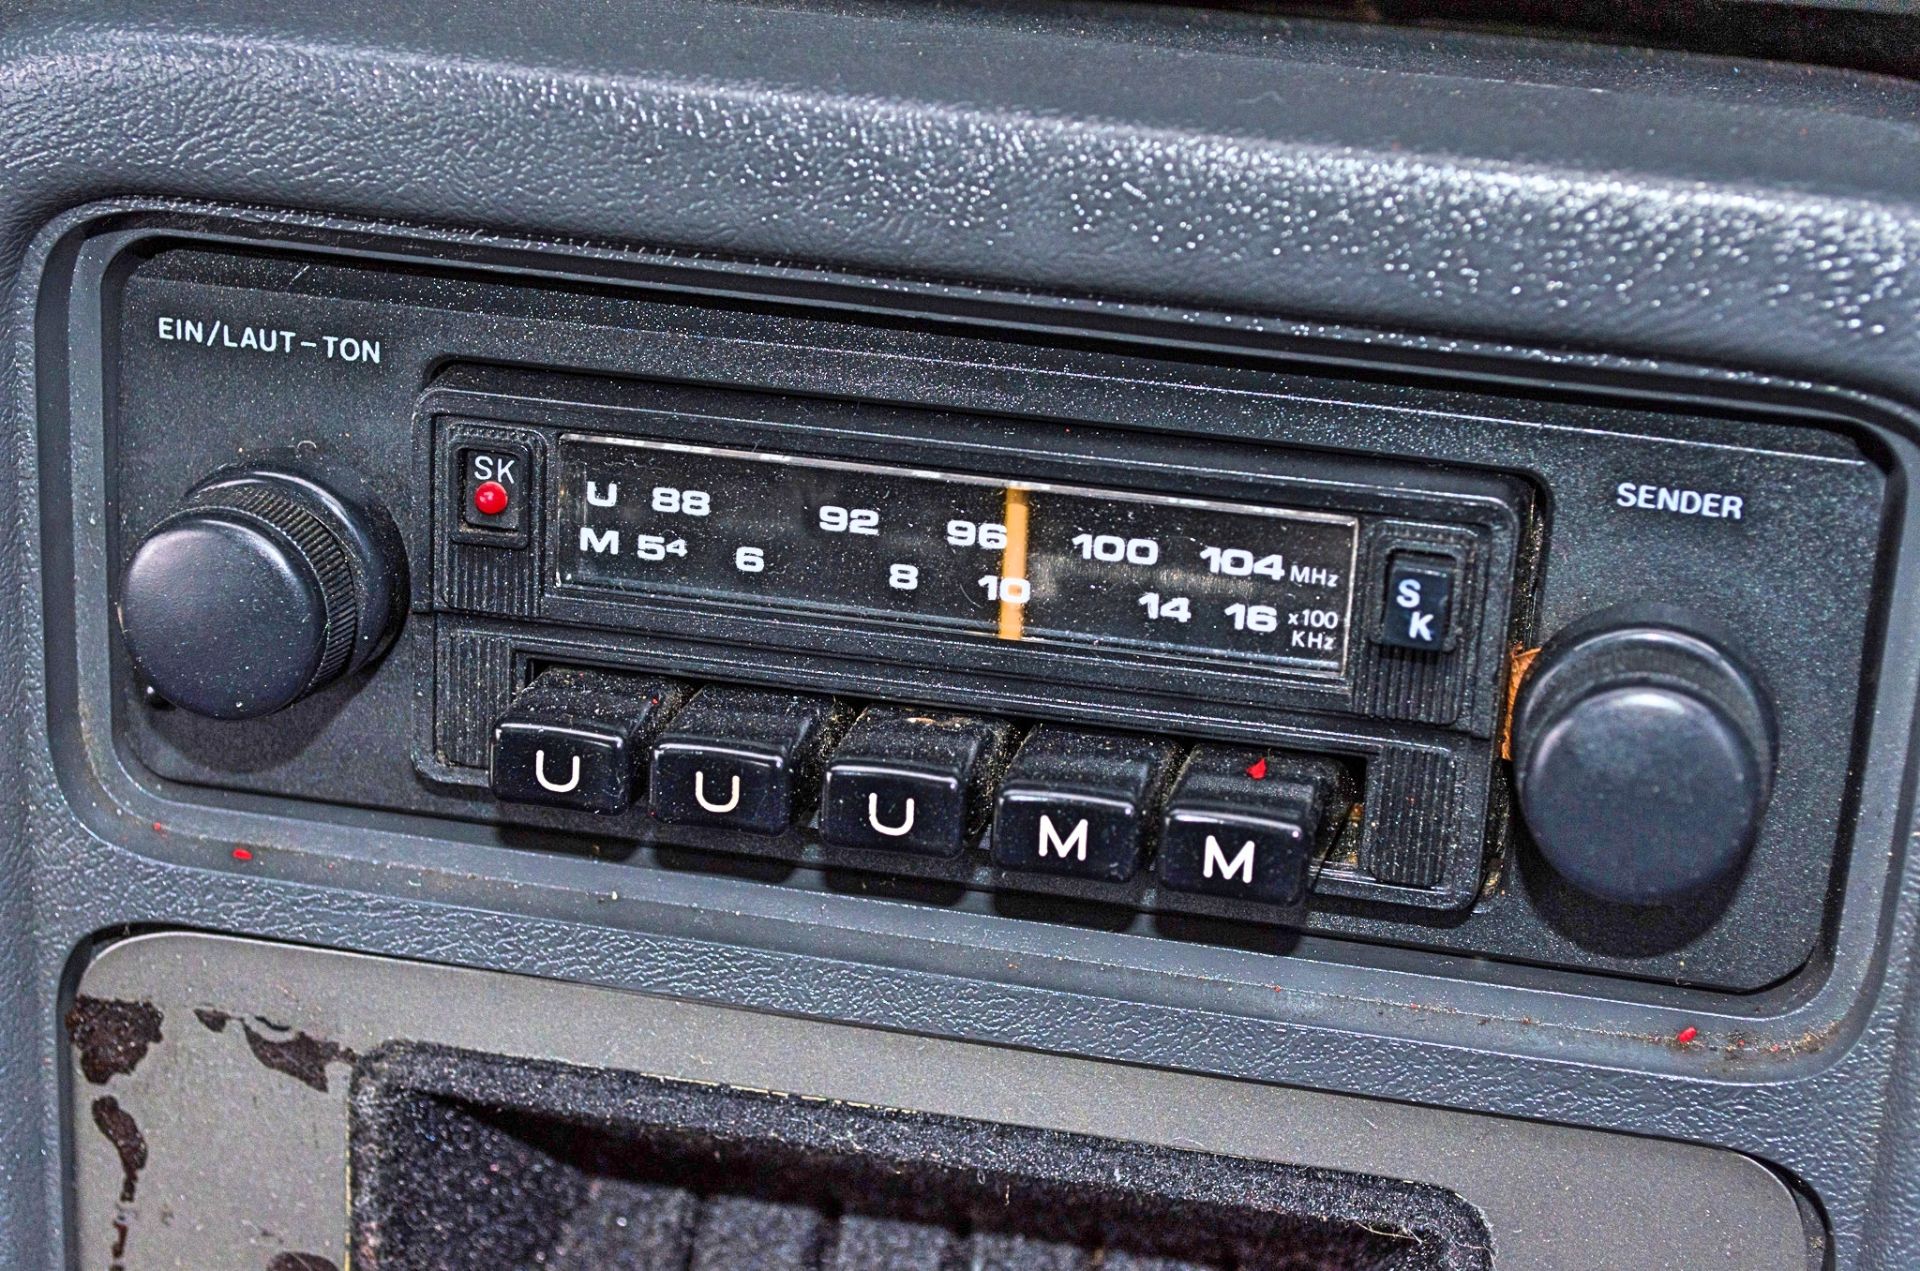 1983 Ford Fiesta XR2 1600cc 3 door hatchback - Image 34 of 47